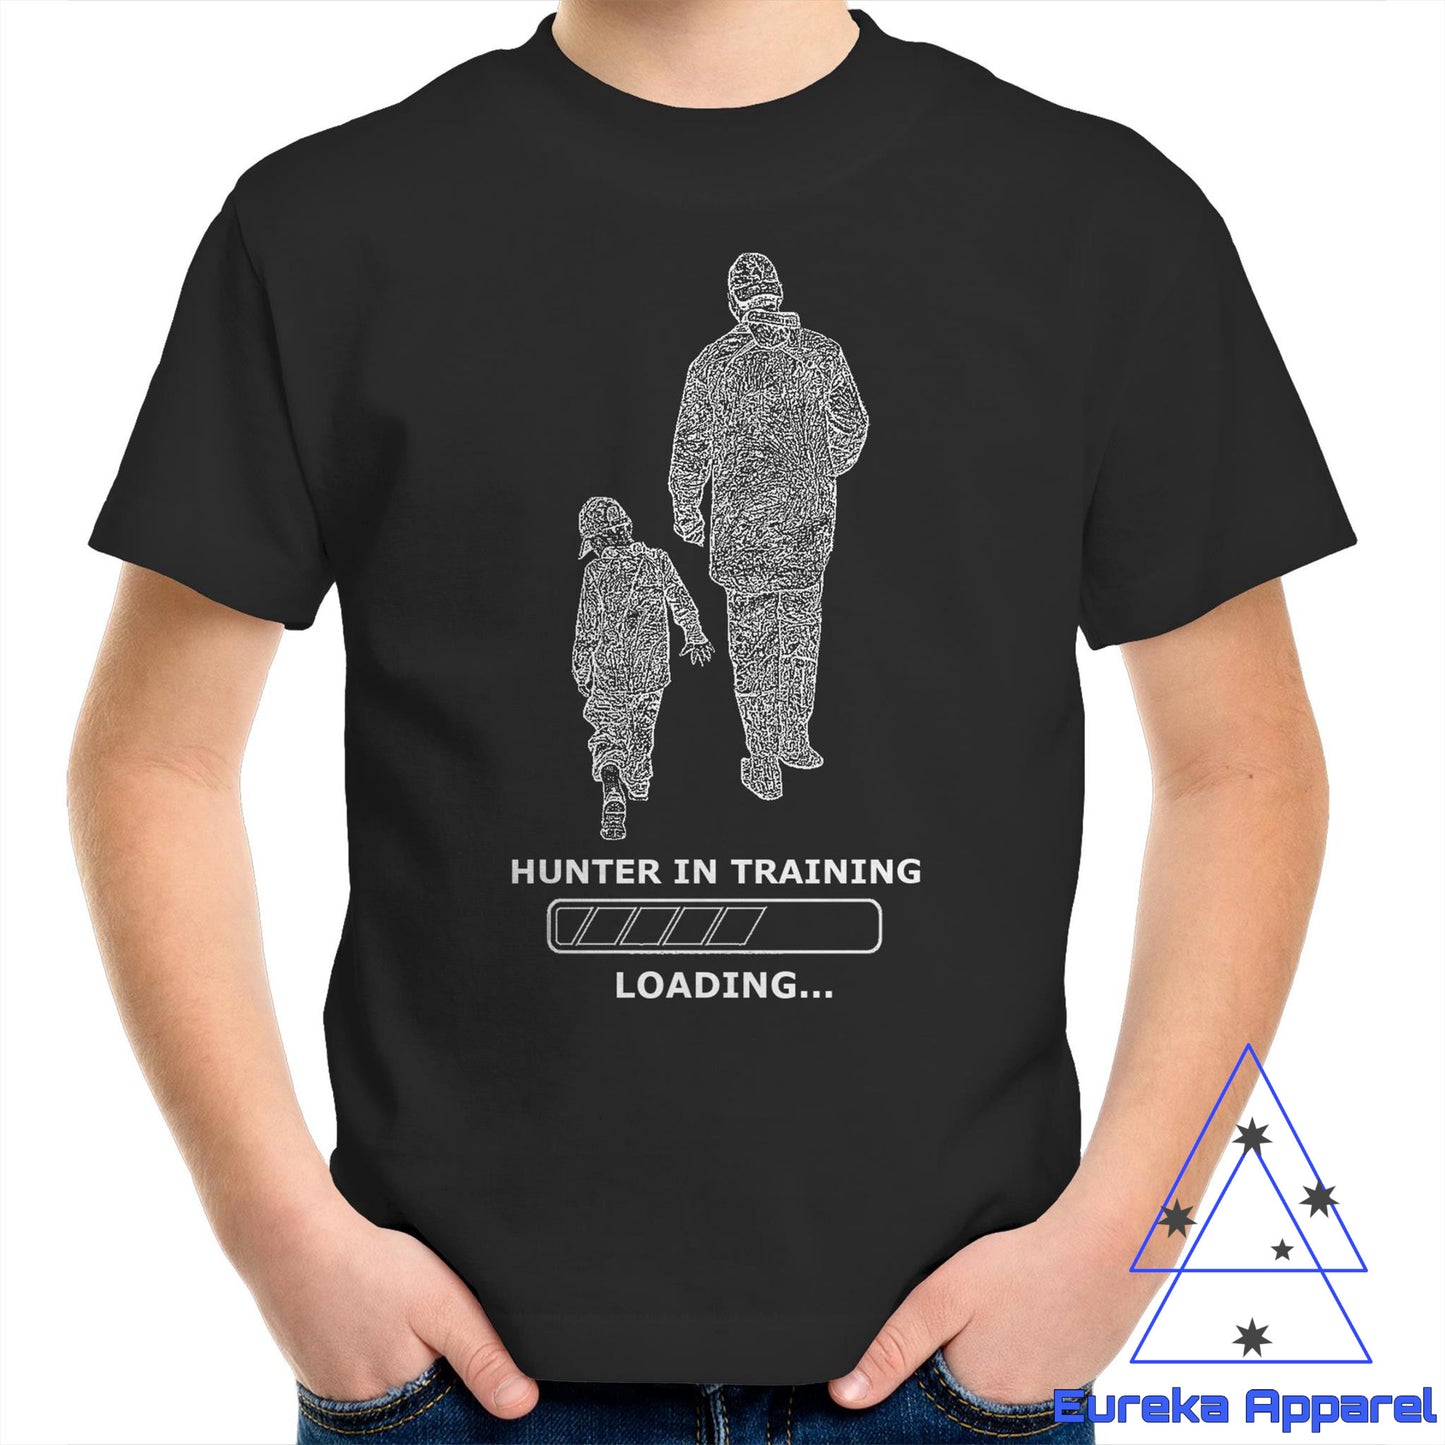 Hunter in Training. Loading... Kids Youth Crew T-Shirt